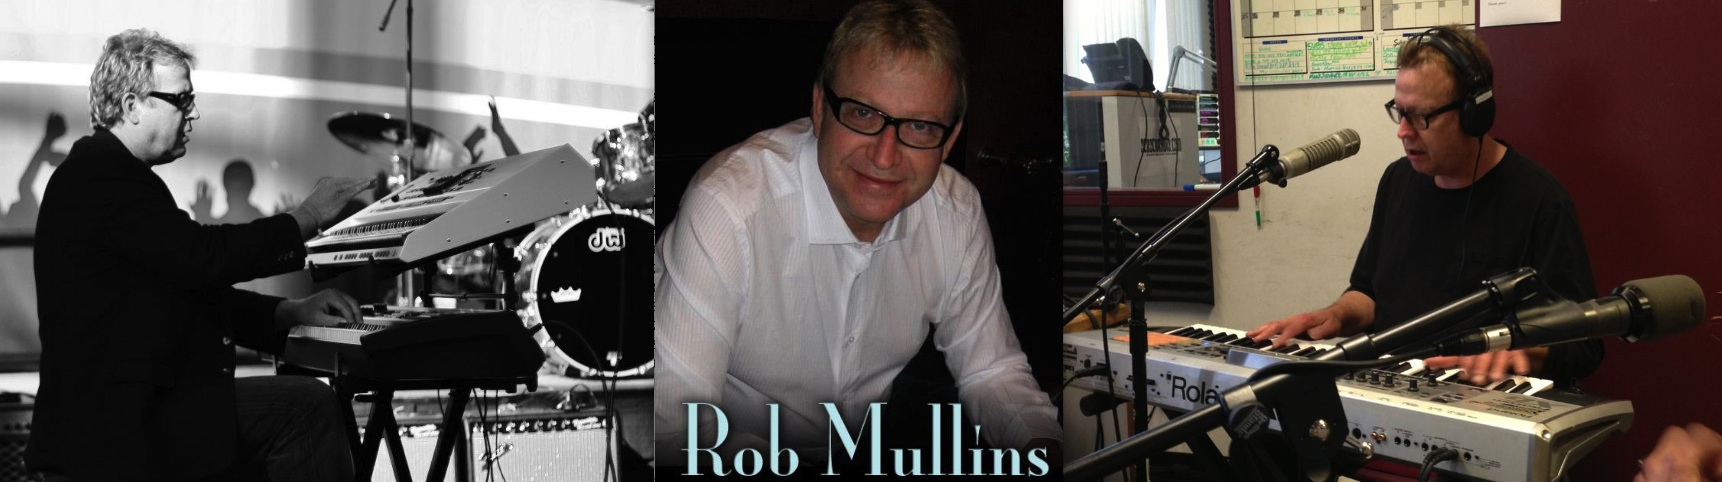 Critics speak about Rob
        Mullins-article archive